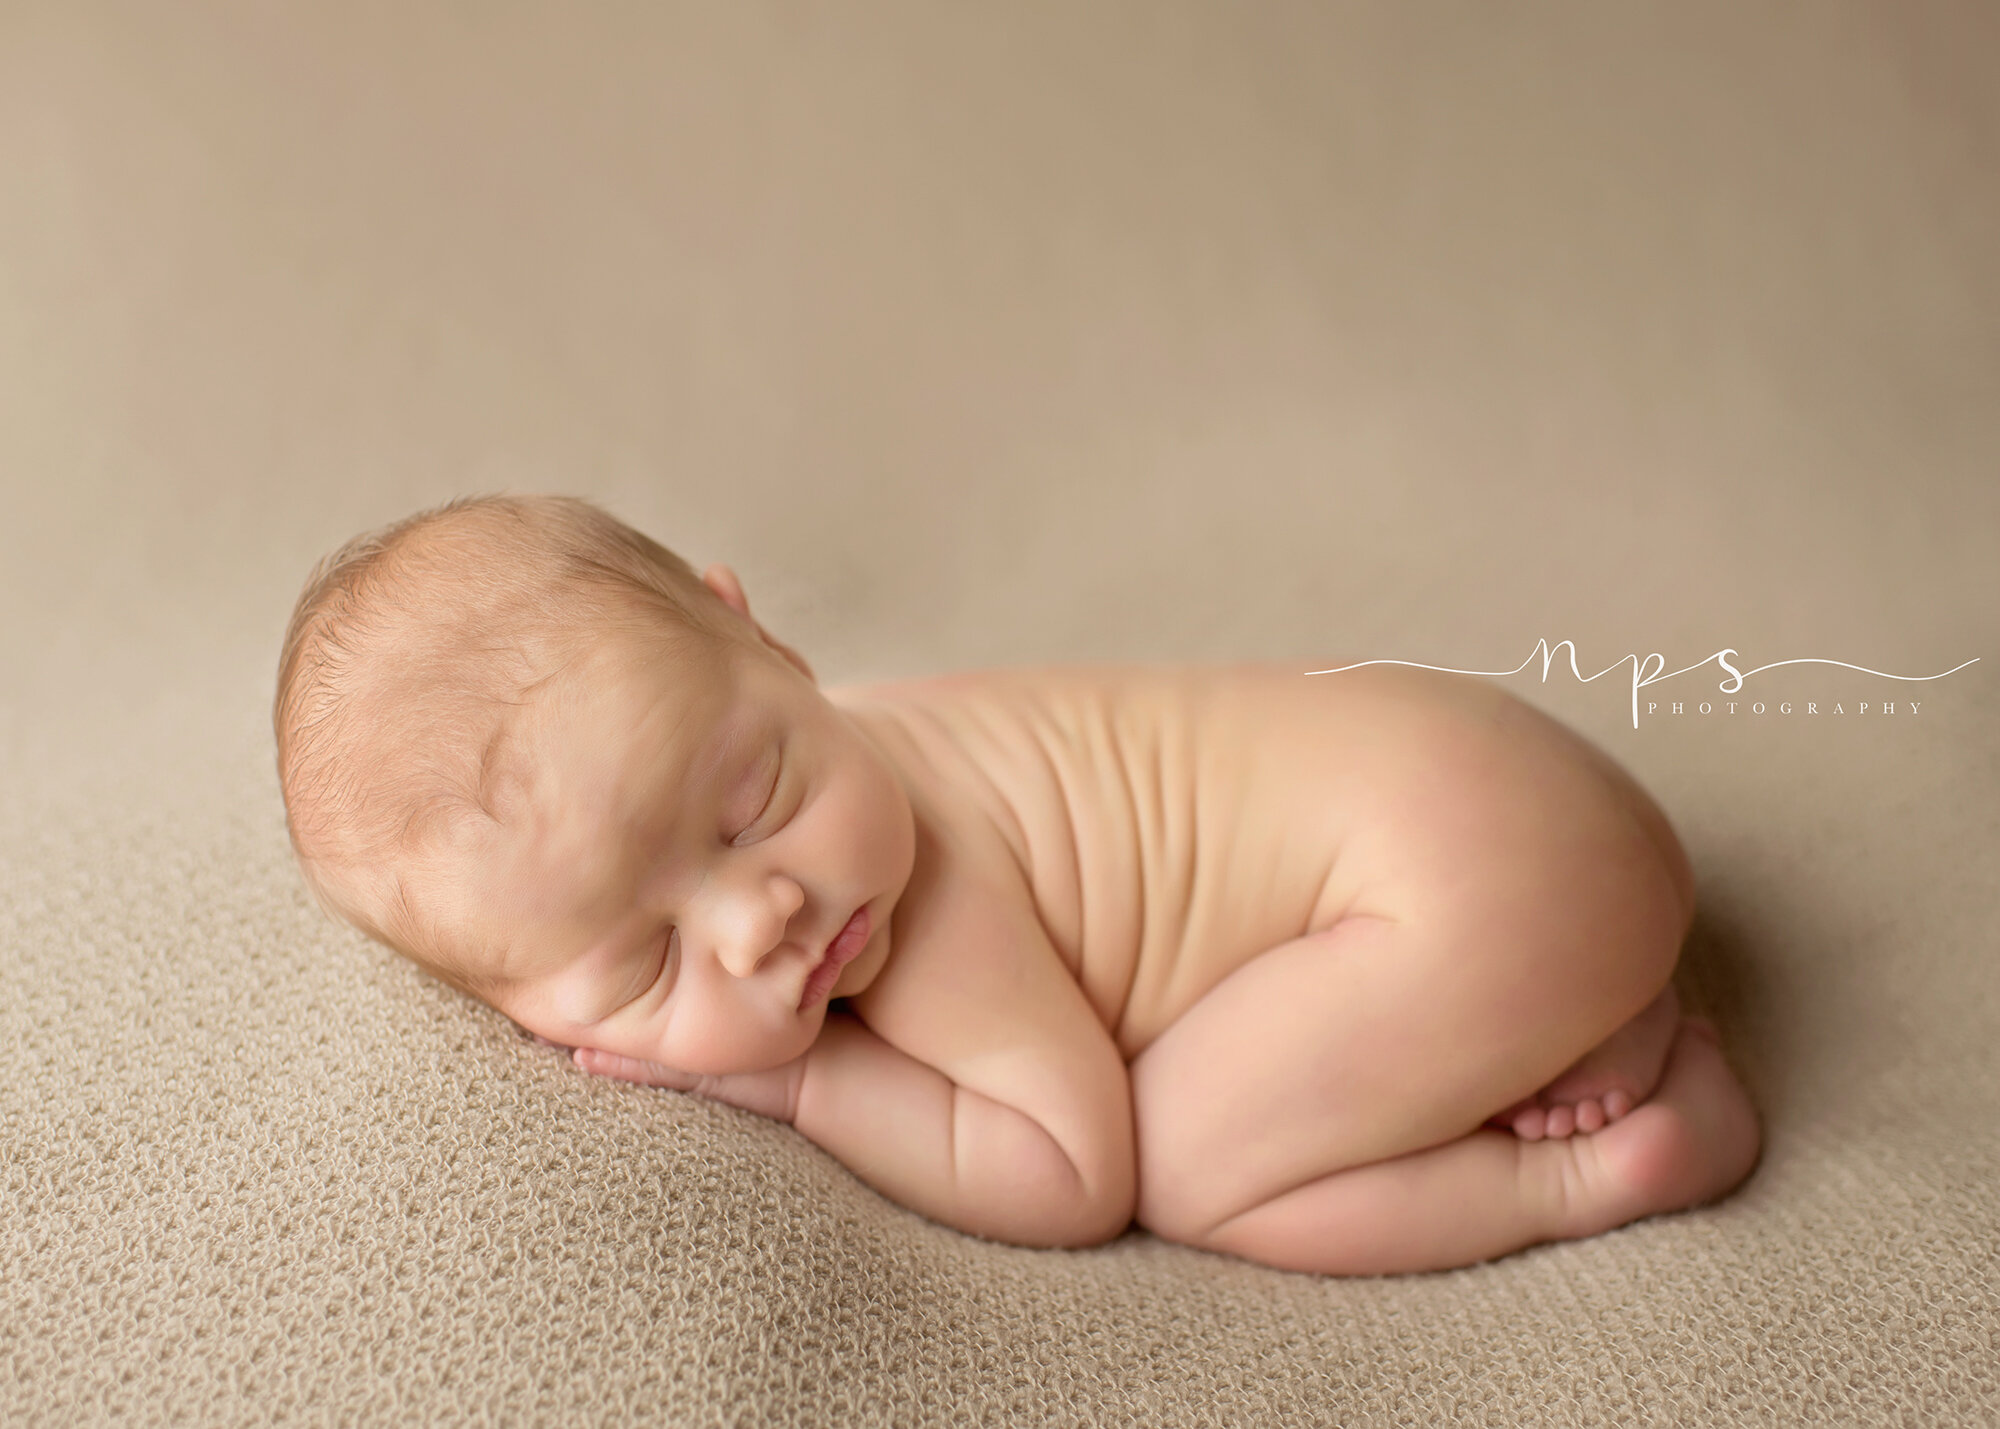 NPS-Photography-Raeford Newborn Photographer-Baby-F-002